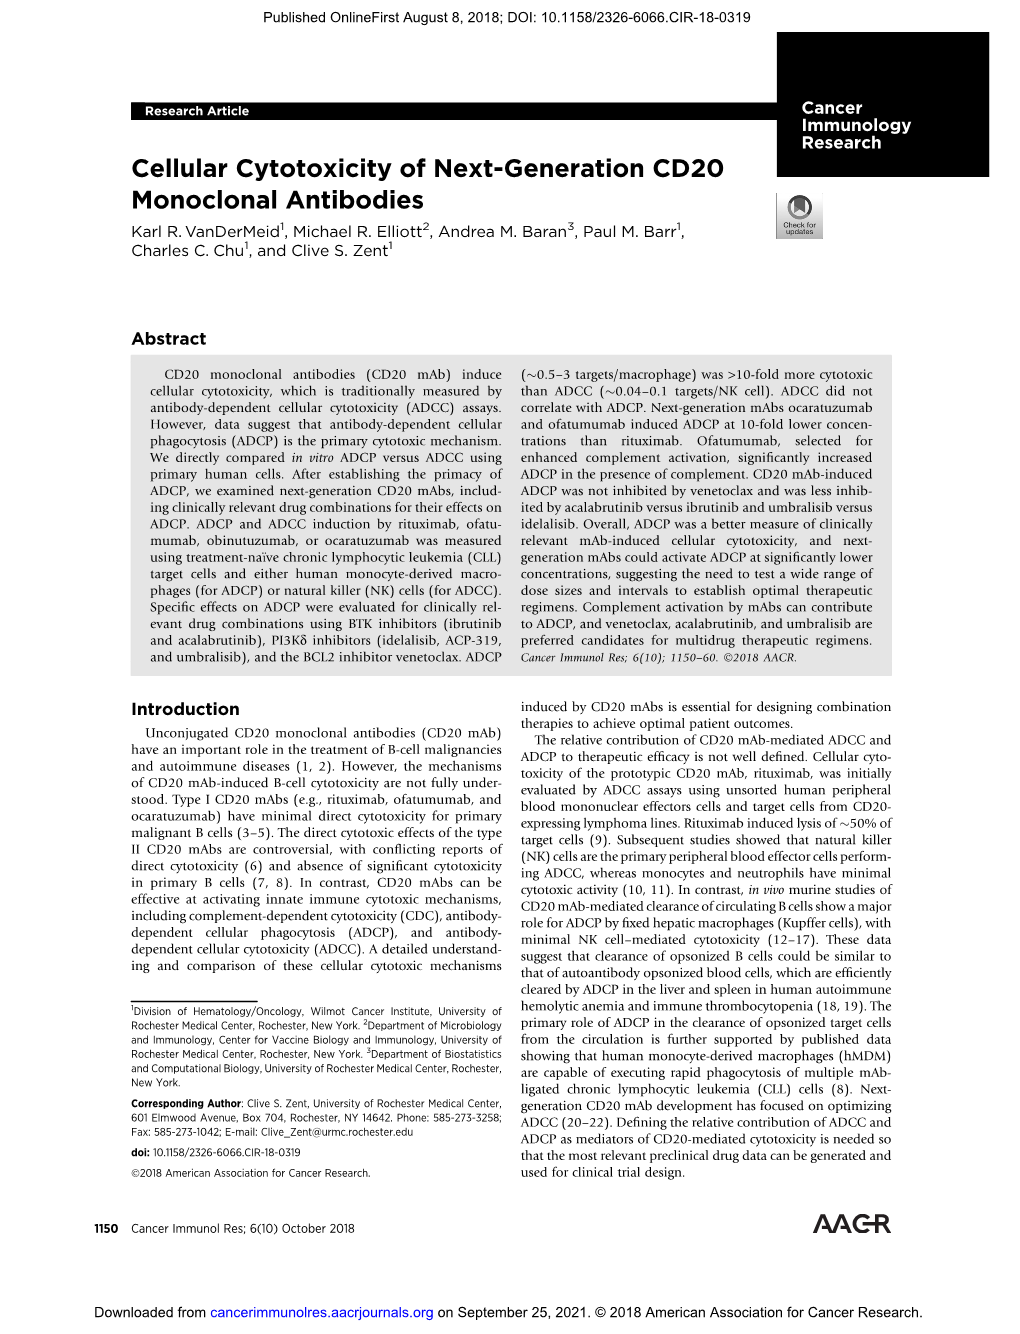 Cellular Cytotoxicity of Next-Generation CD20 Monoclonal Antibodies Karl R